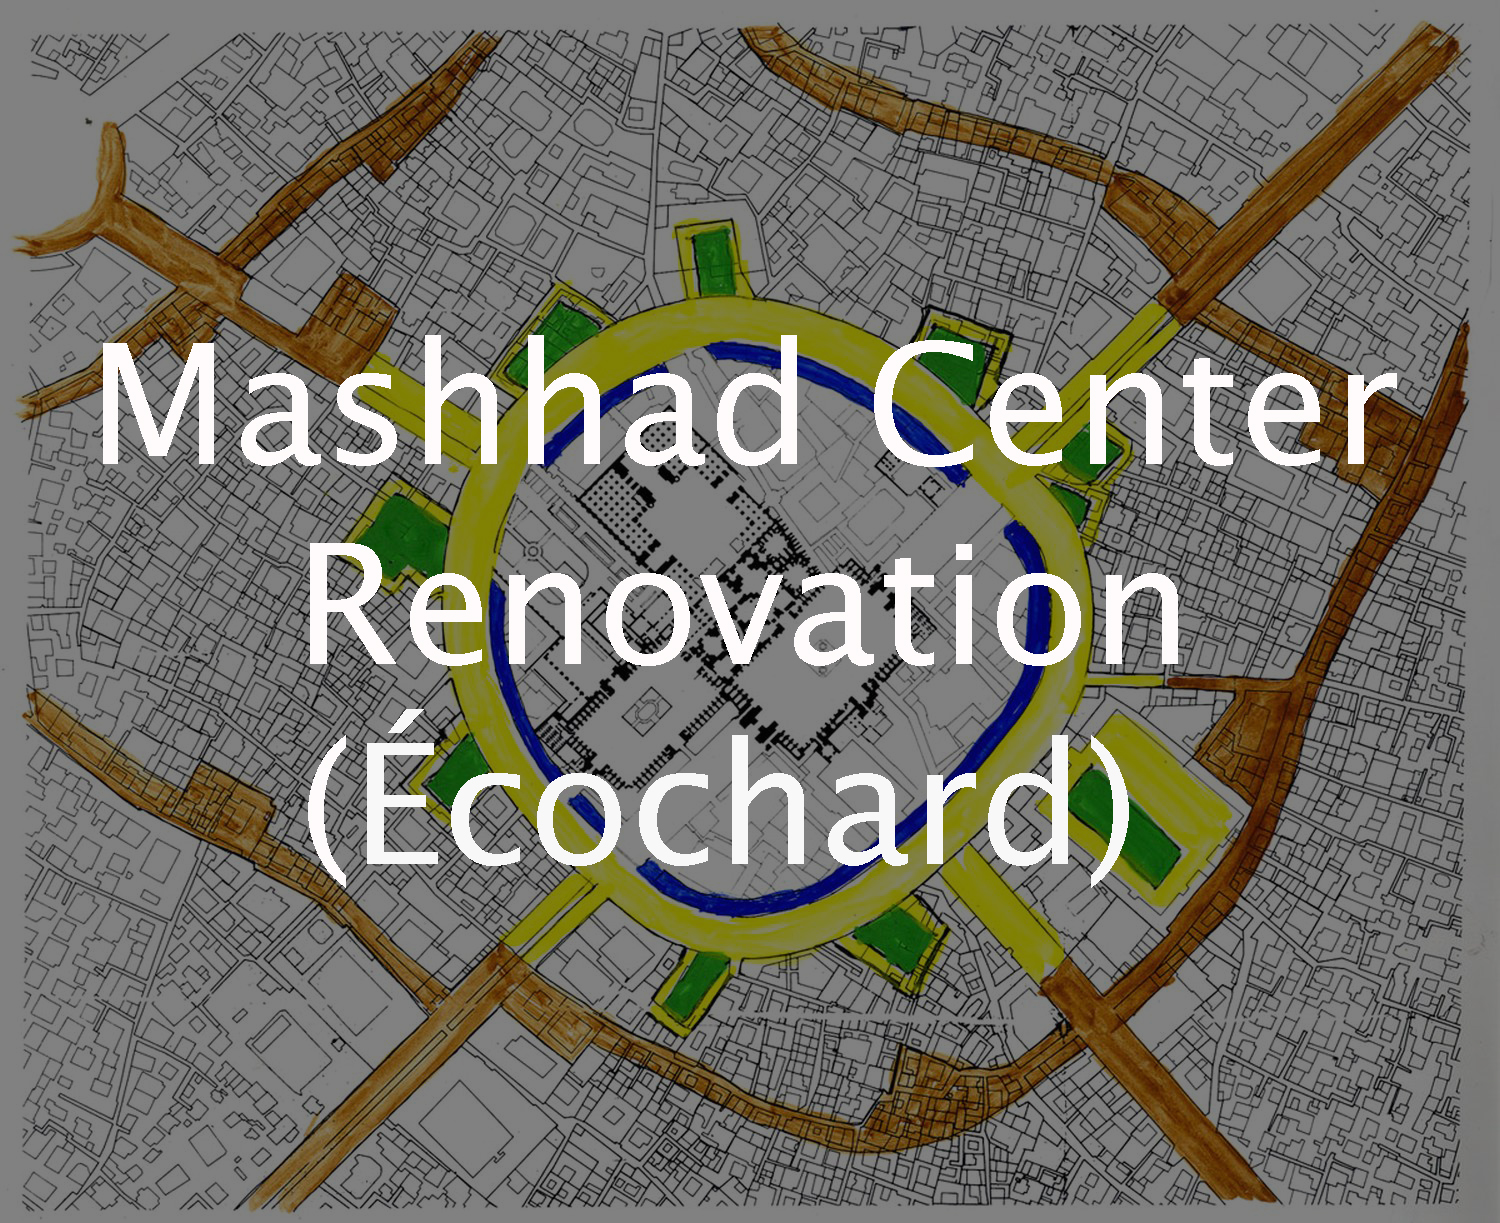 Écochard: Mashhad Center Renovation Project